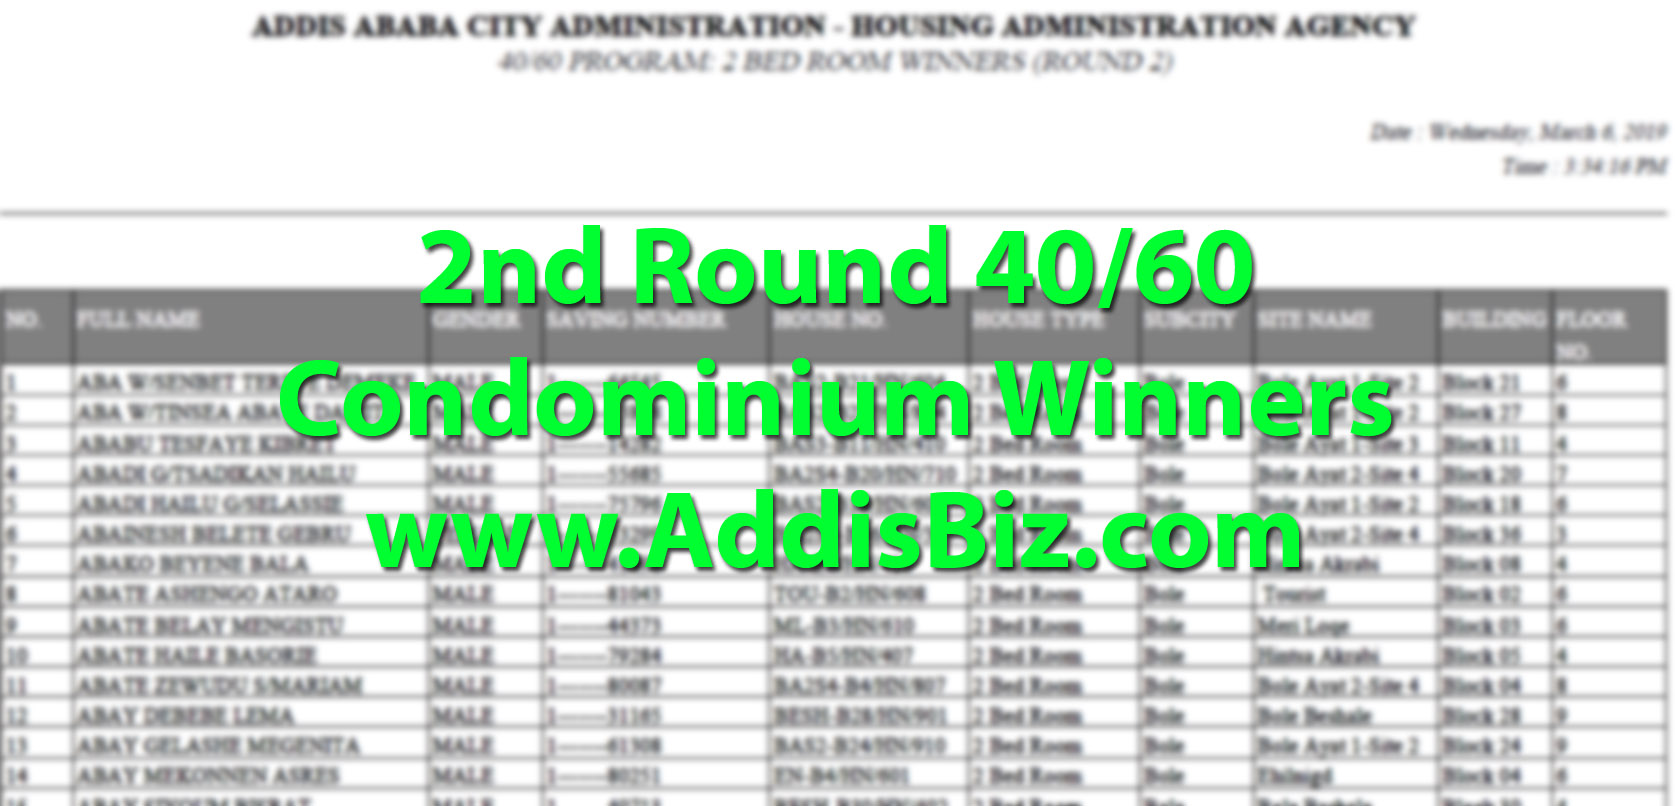 addis lisan newspaper condominium winners.pdf